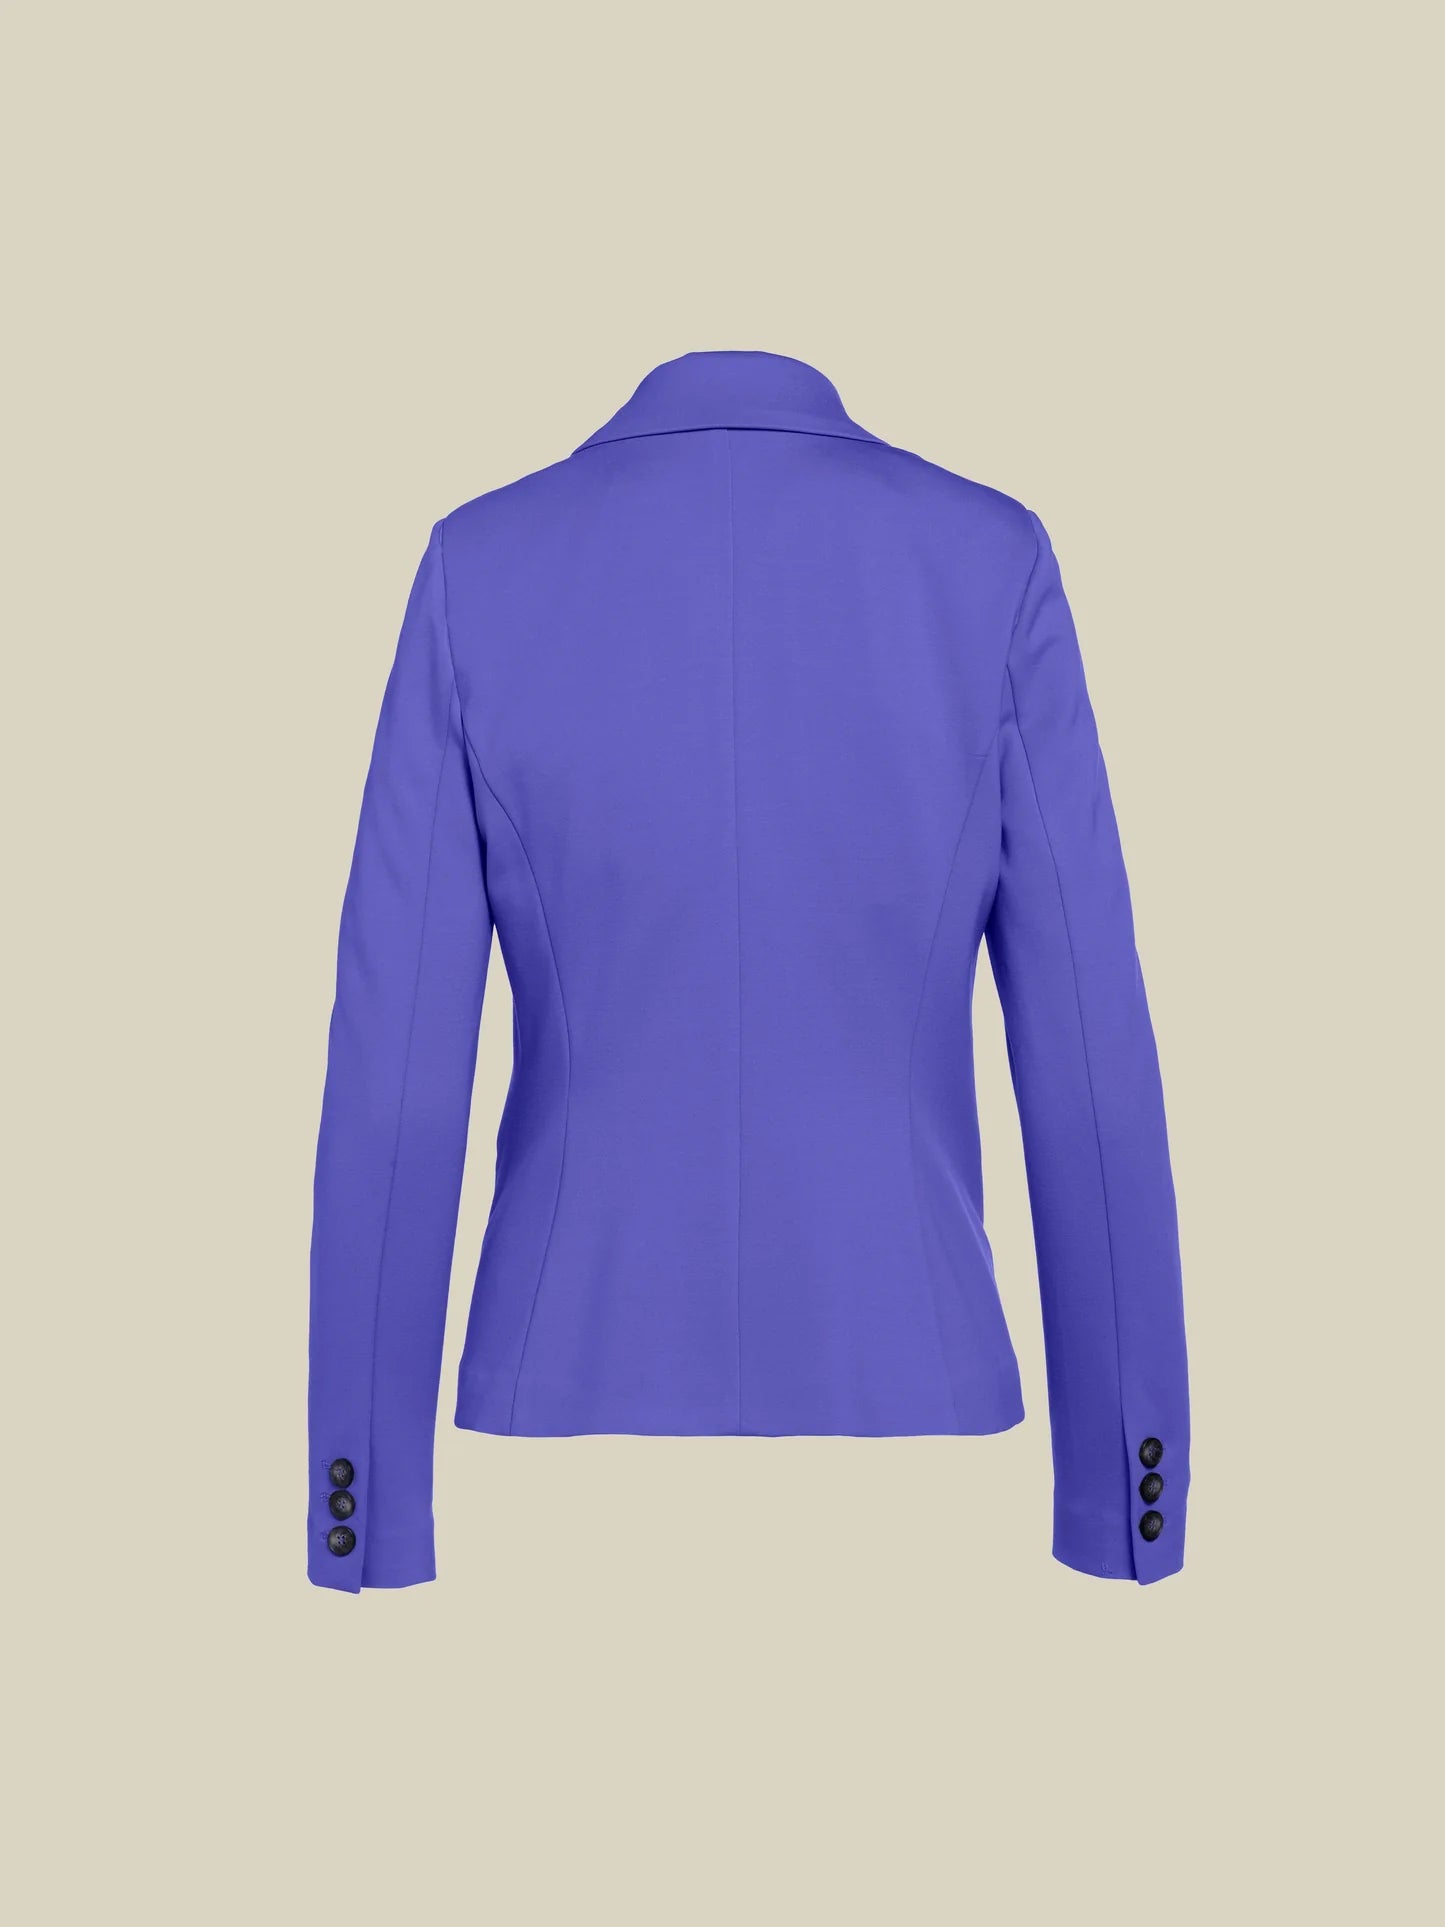 Vest Blauw Beaumont ( Petit Bc55110/4420 ) - Delaere Womenswear